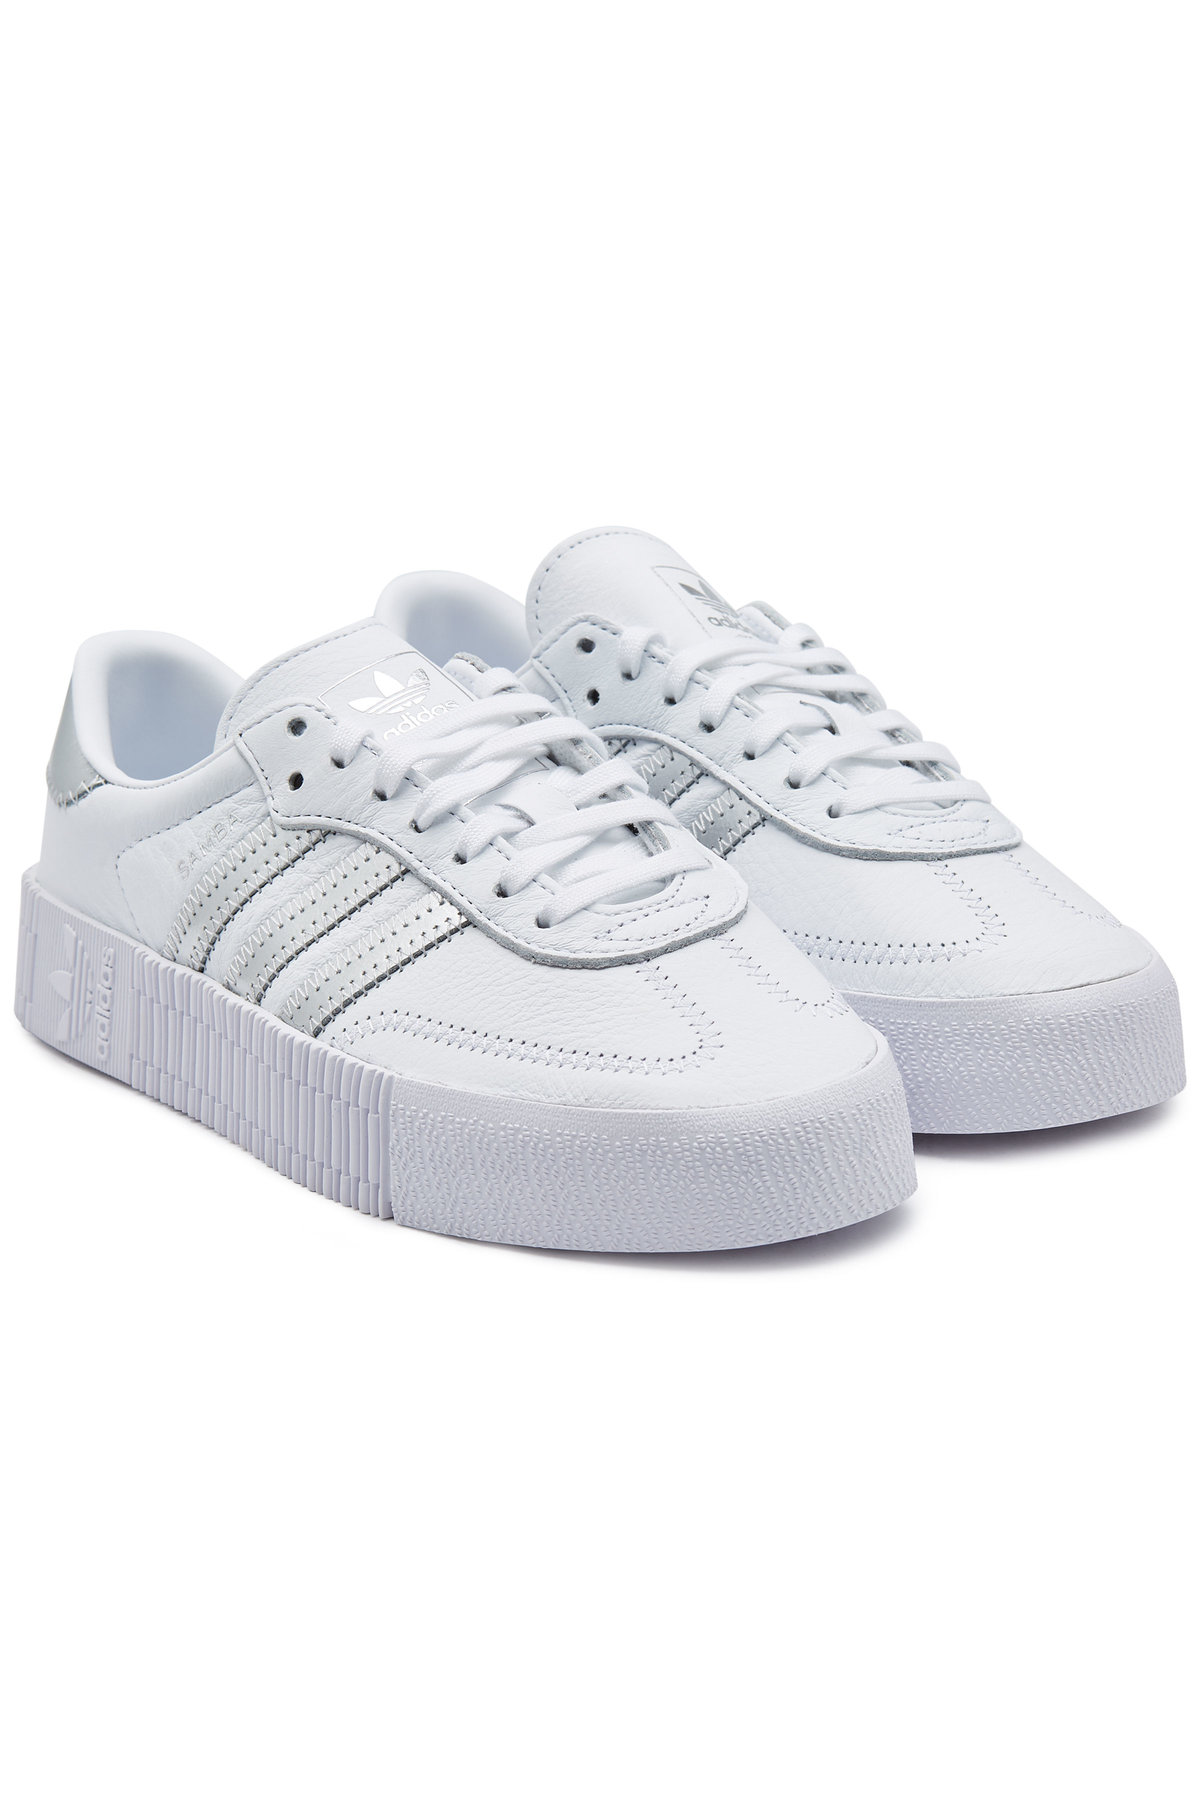 adidas platform white sneakers